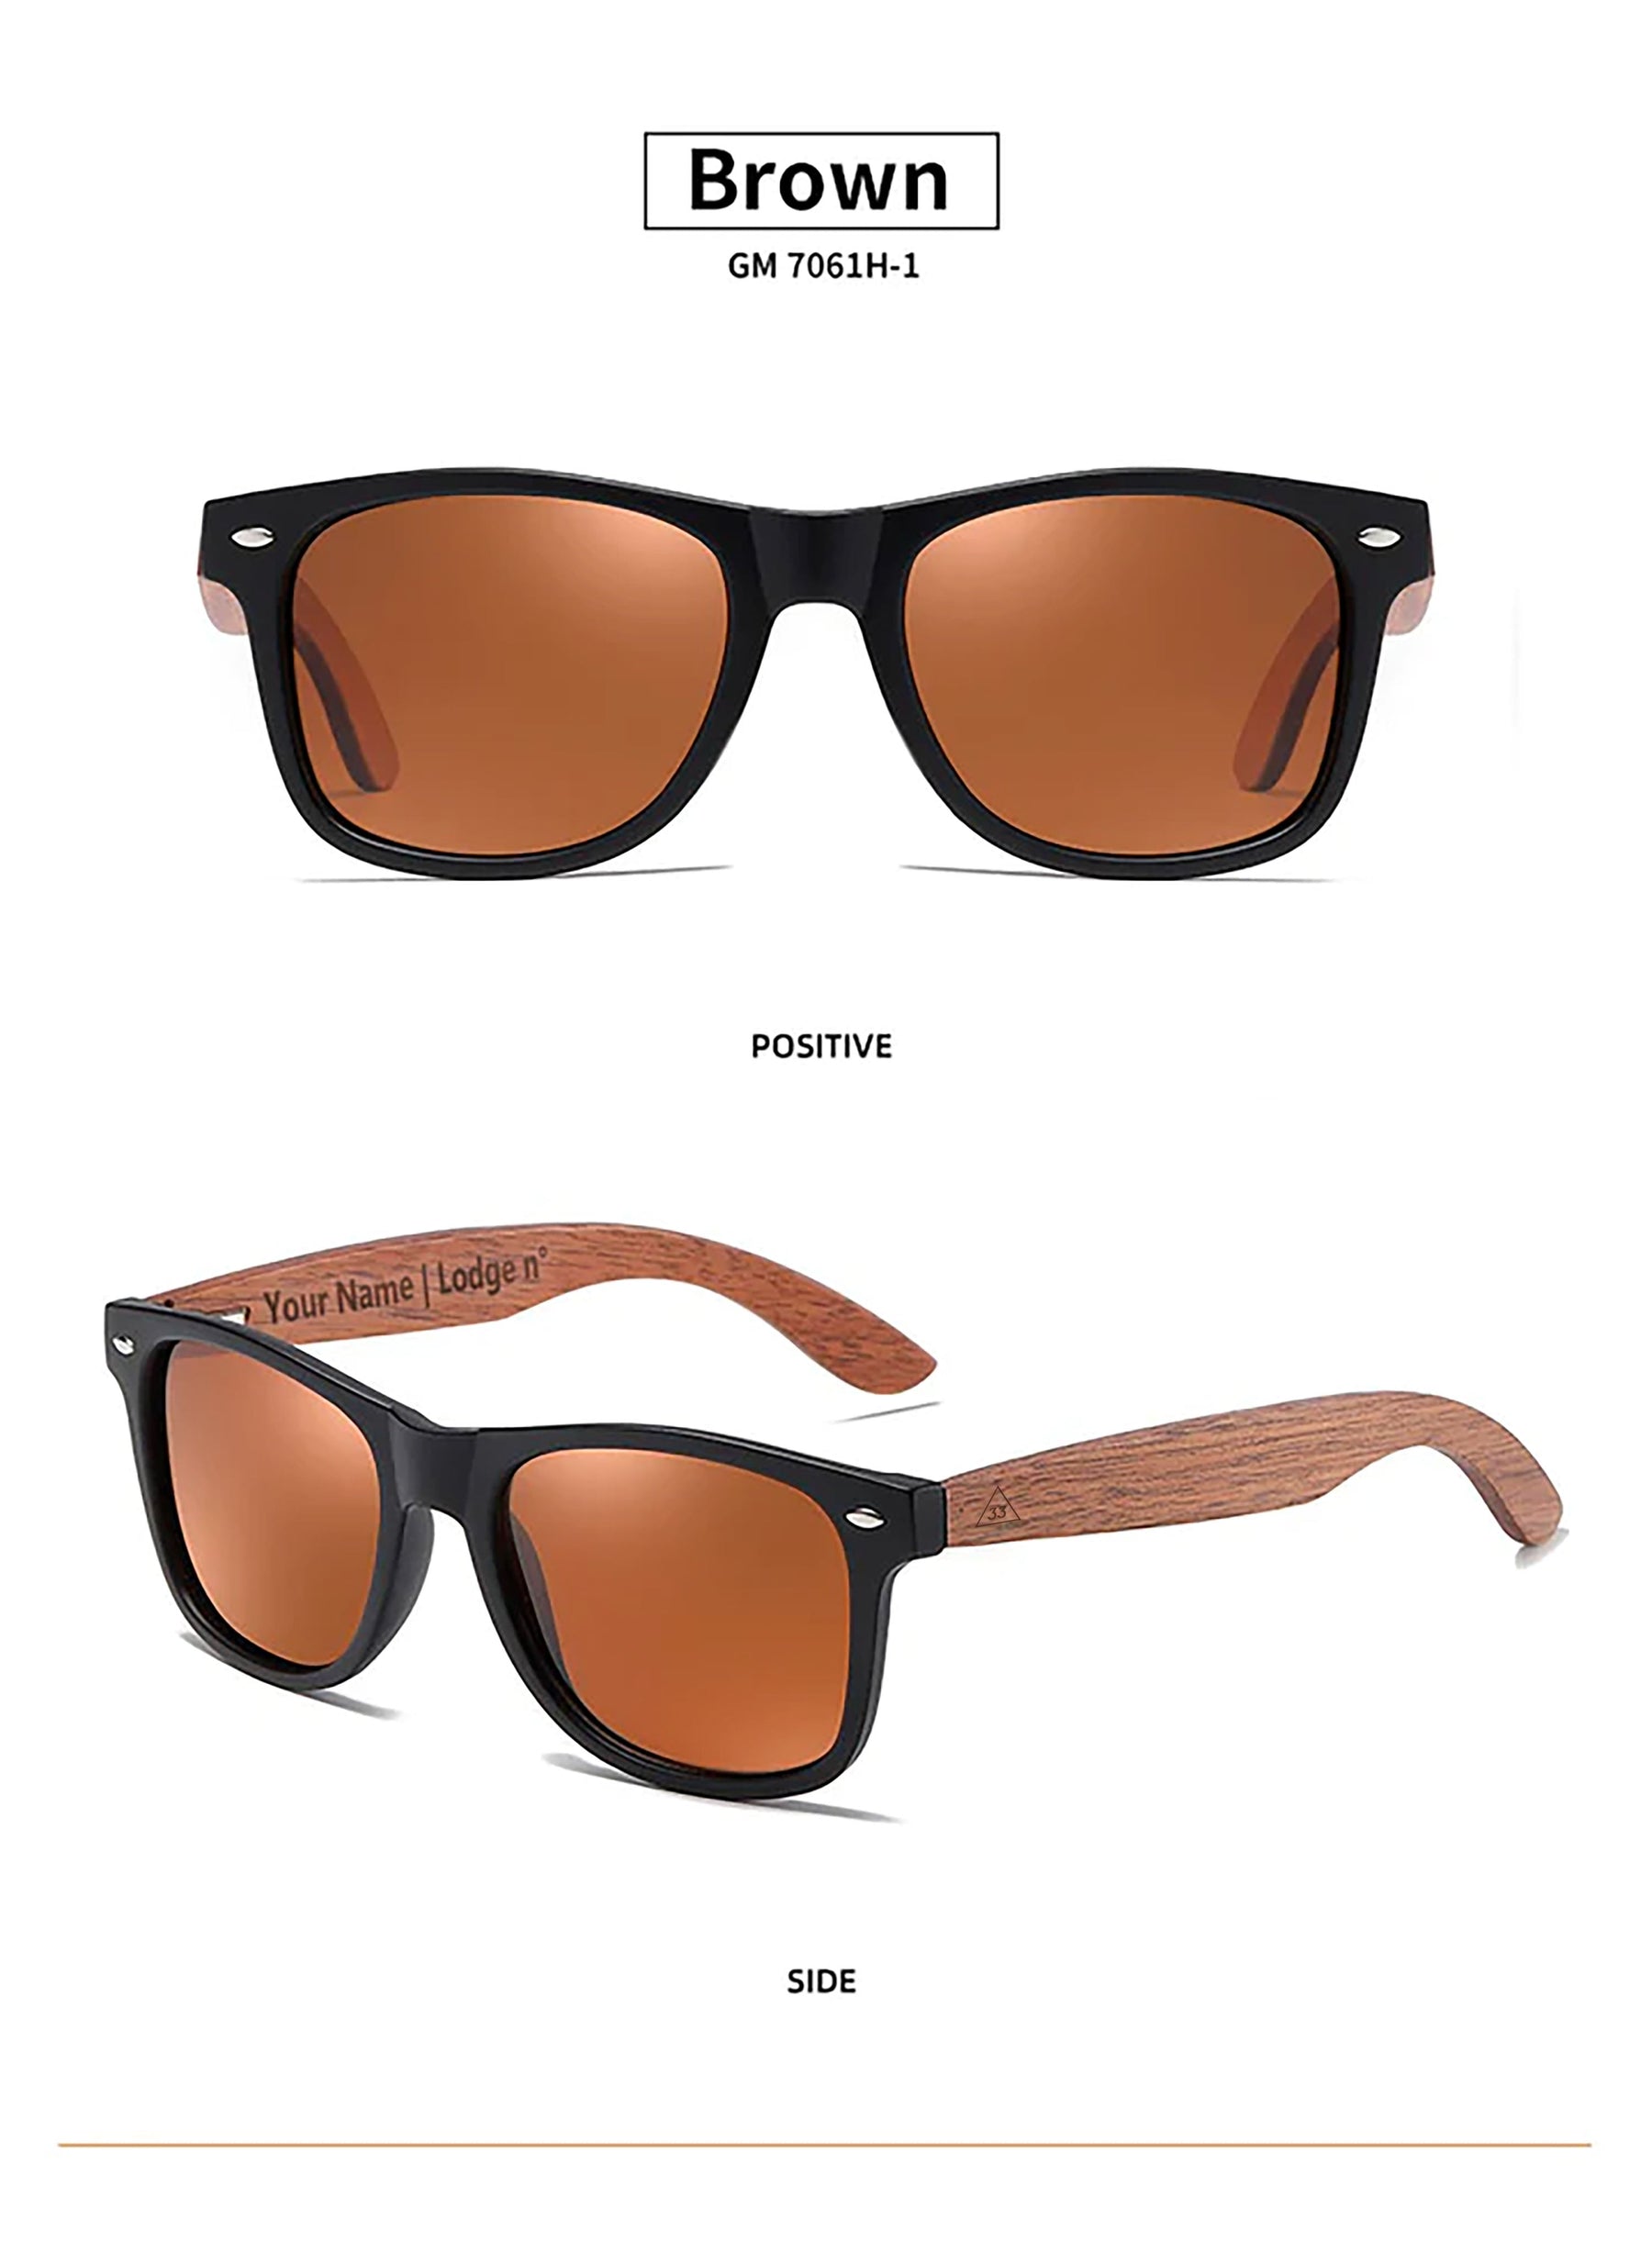 32nd Degree Scottish Rite Sunglasses - Wings Down UV Protection - Bricks Masons